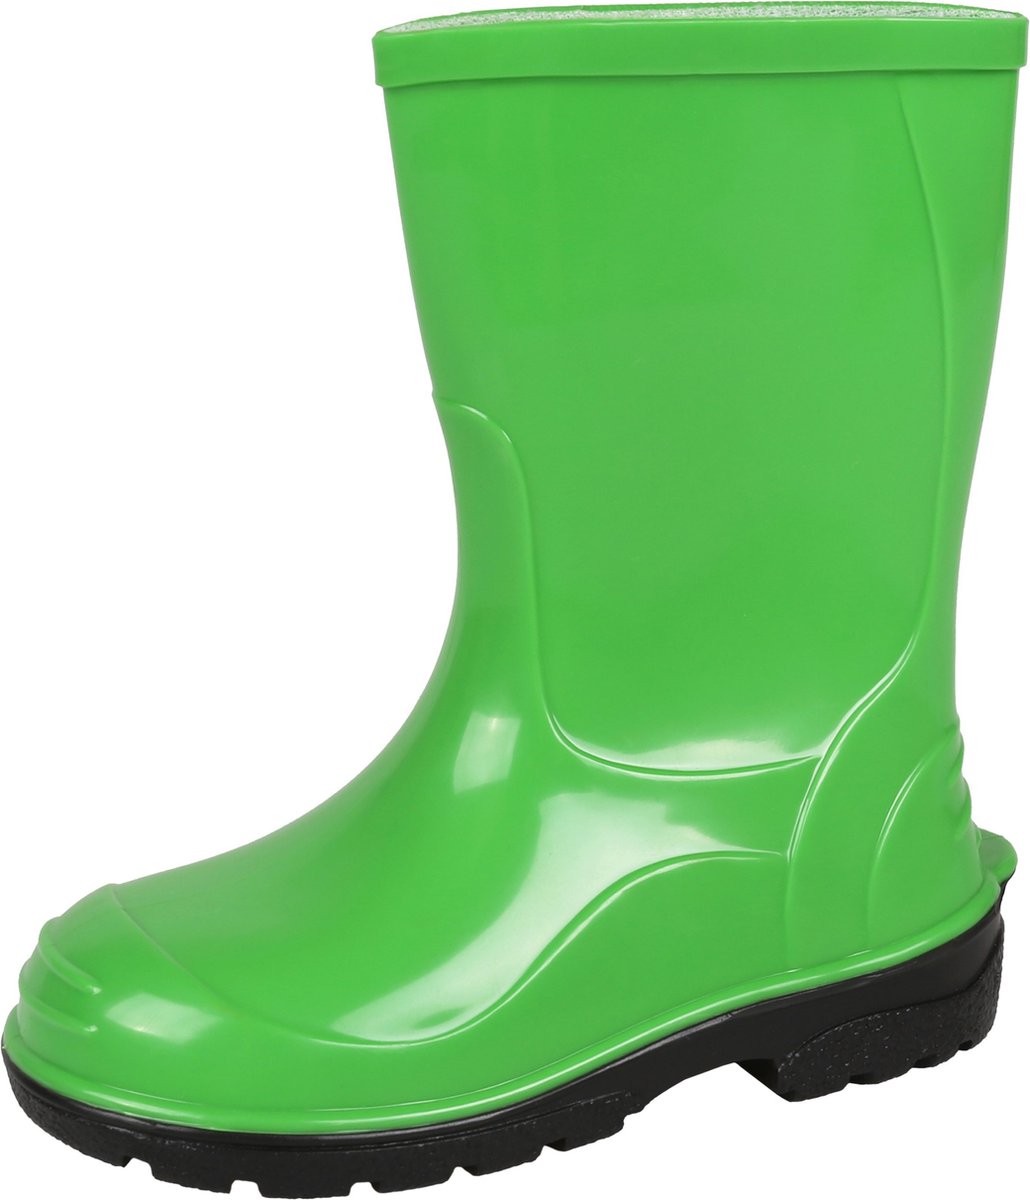 Groene laarzen van PVC materiaal, met antislipzool - OLI LEMIGO / 34